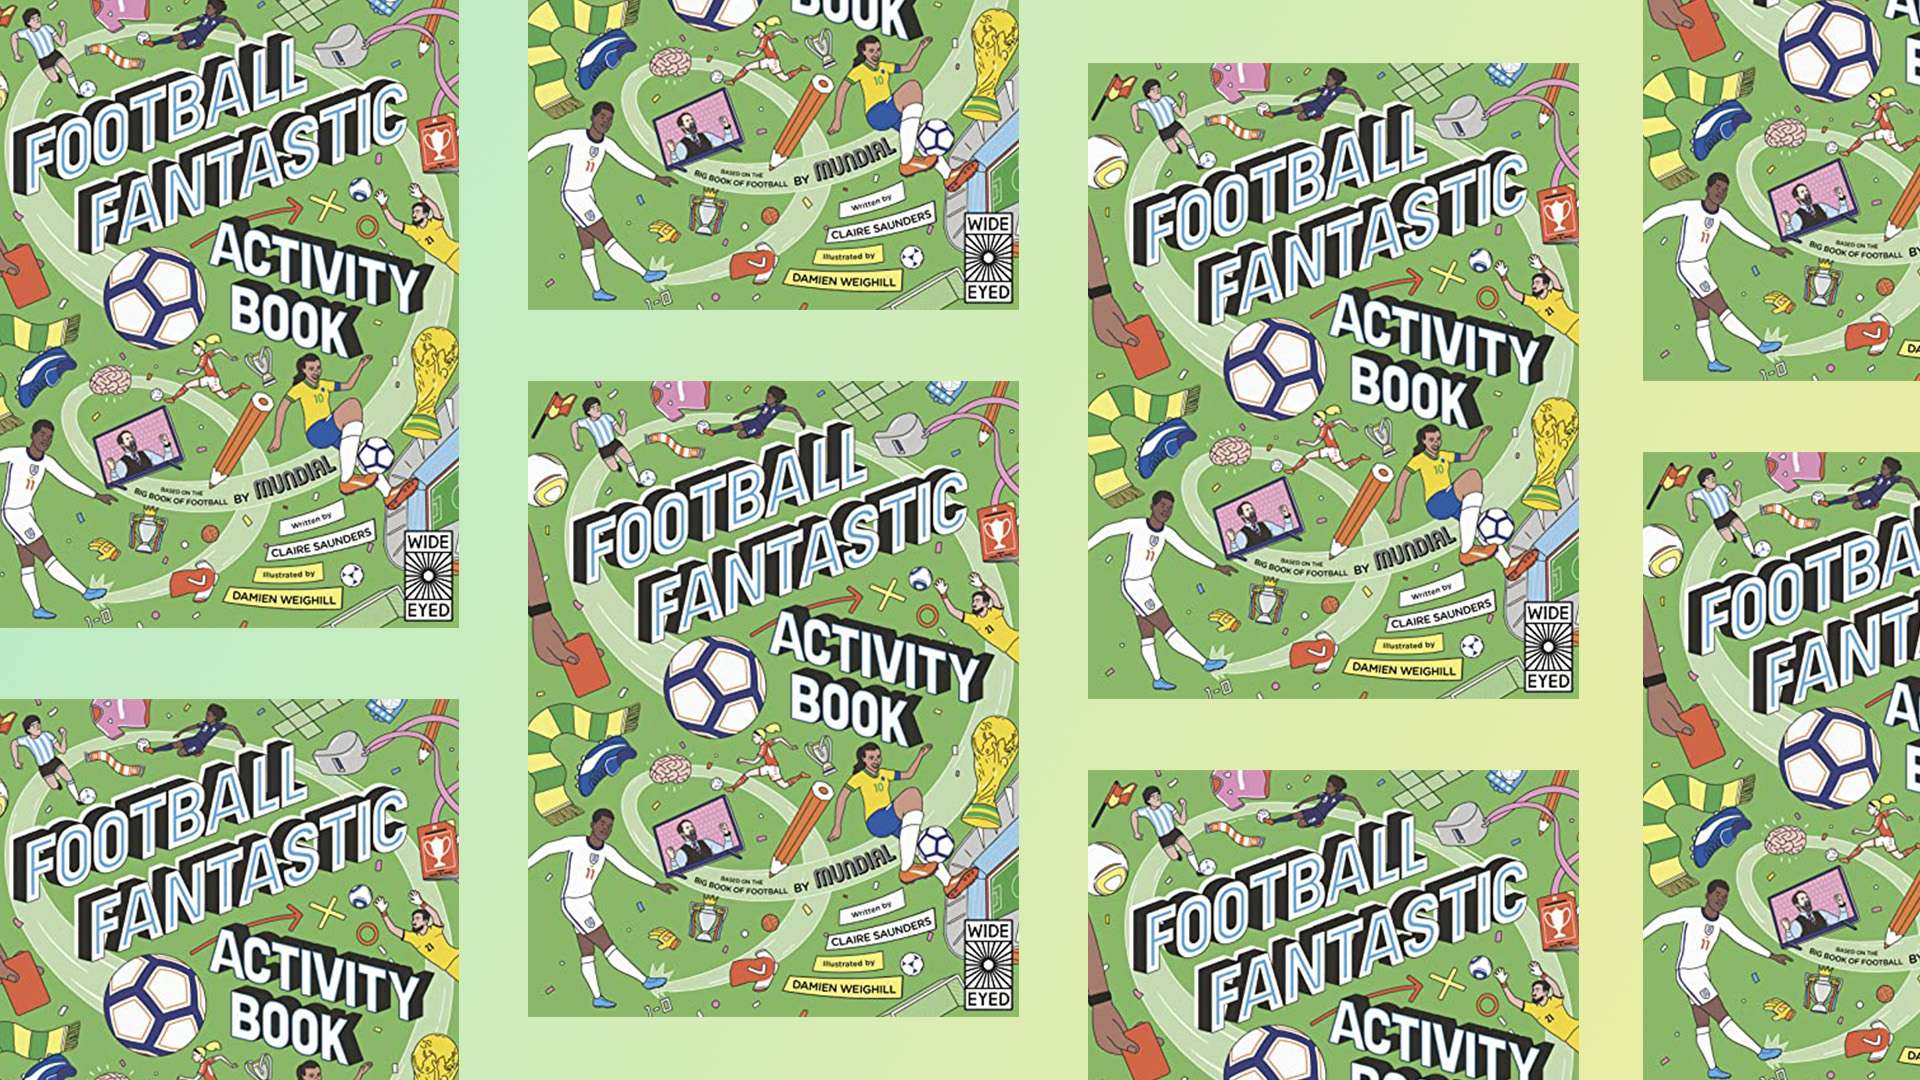 MUNDIAL Football Fantastic Activity Book